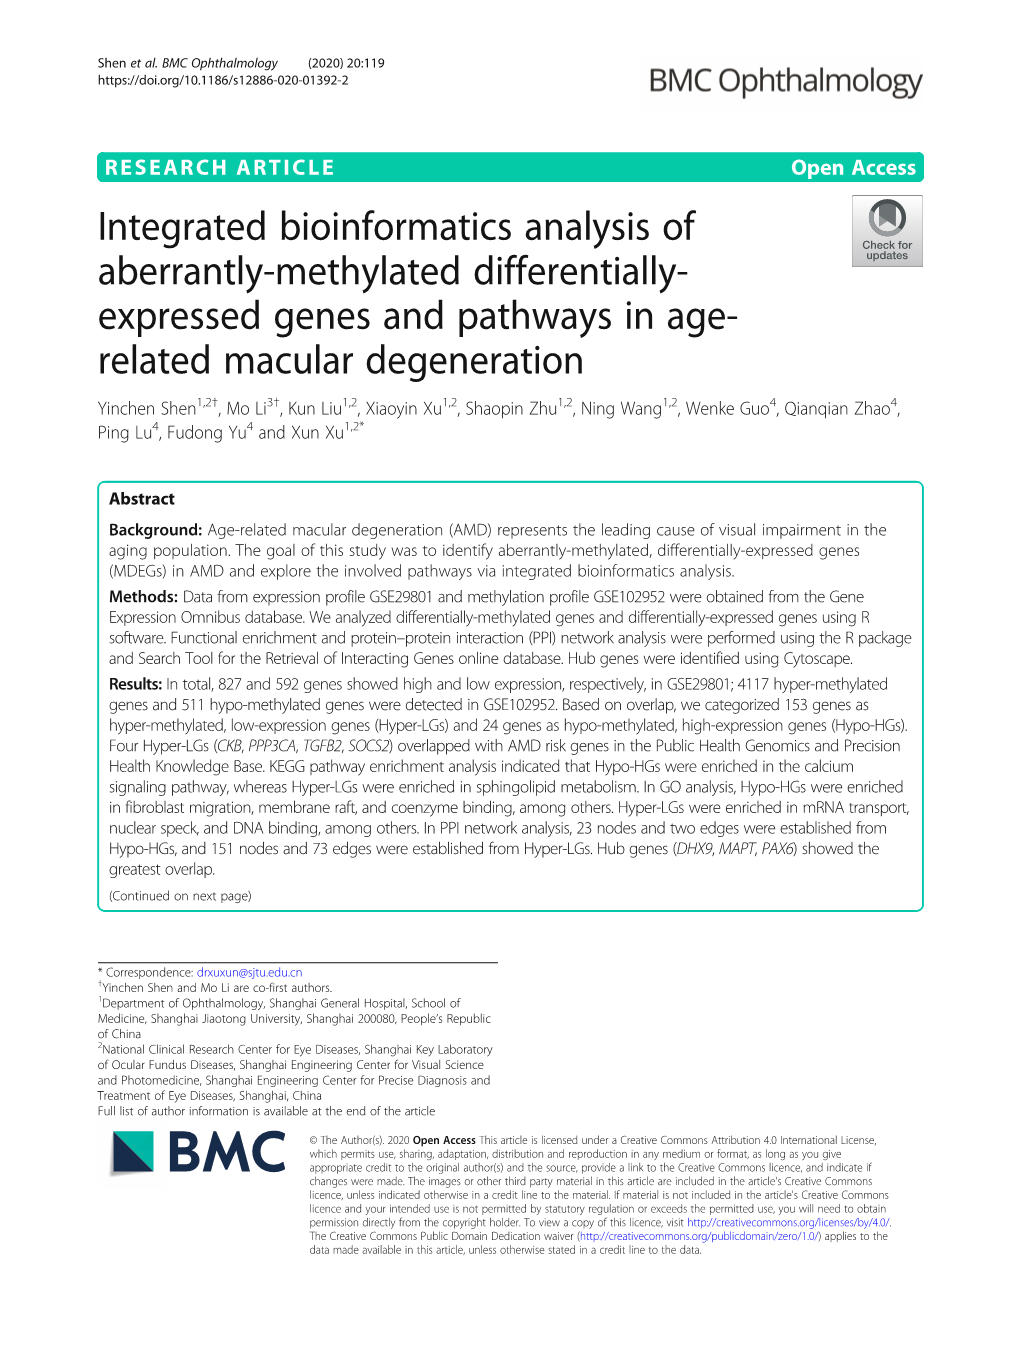 Integrated Bioinformatics Analysis of Aberrantly-Methylated